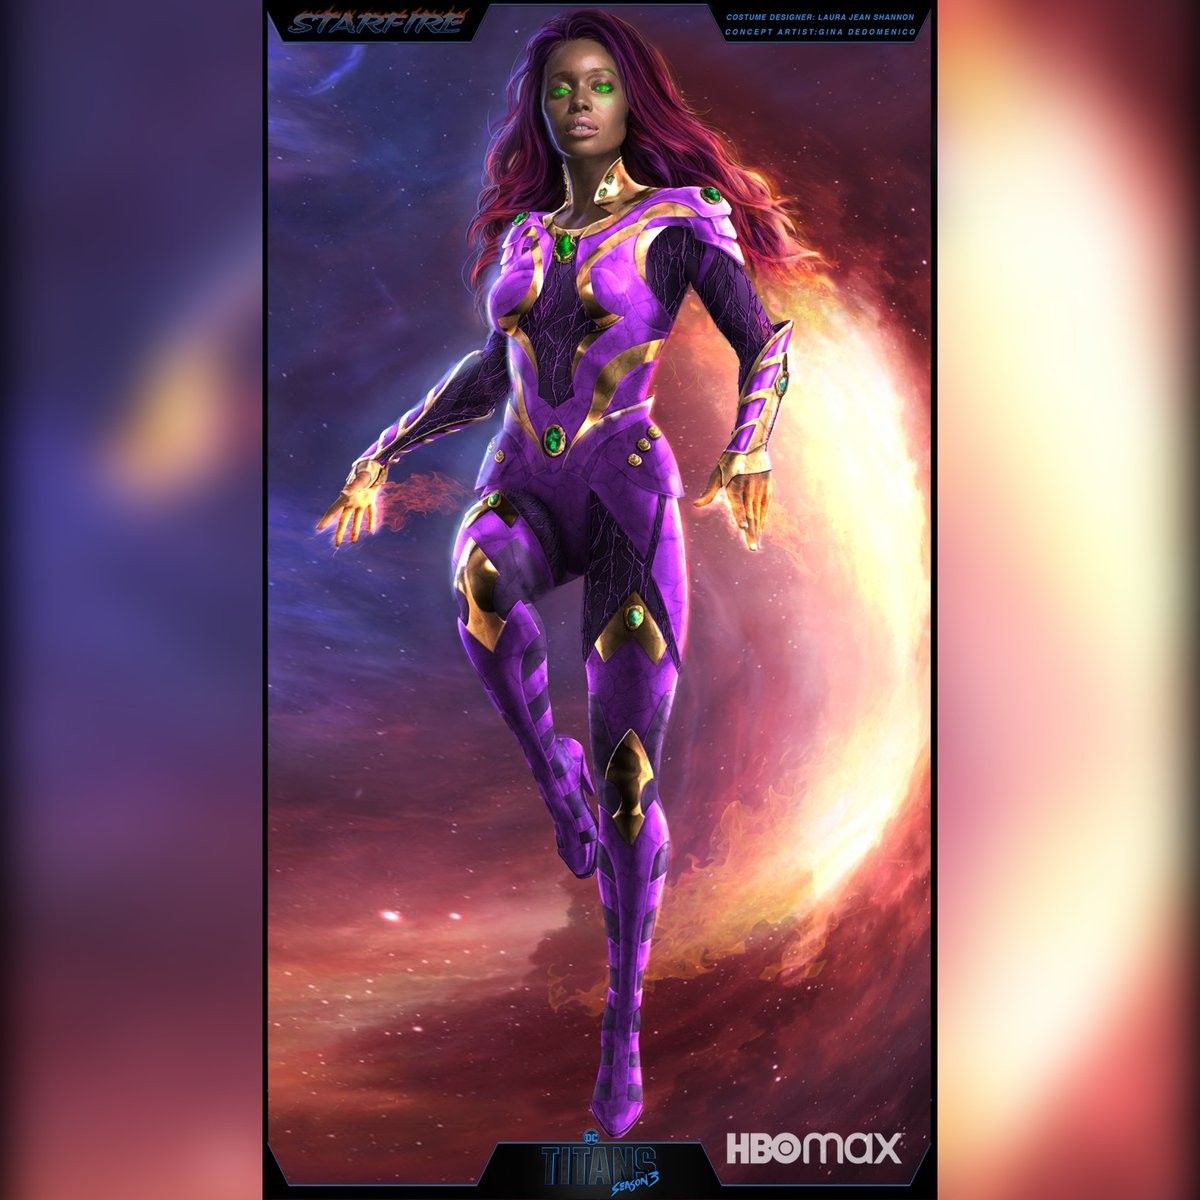 Titans Season 3 Images Reveal Starfire’s Proper Superhero Costume